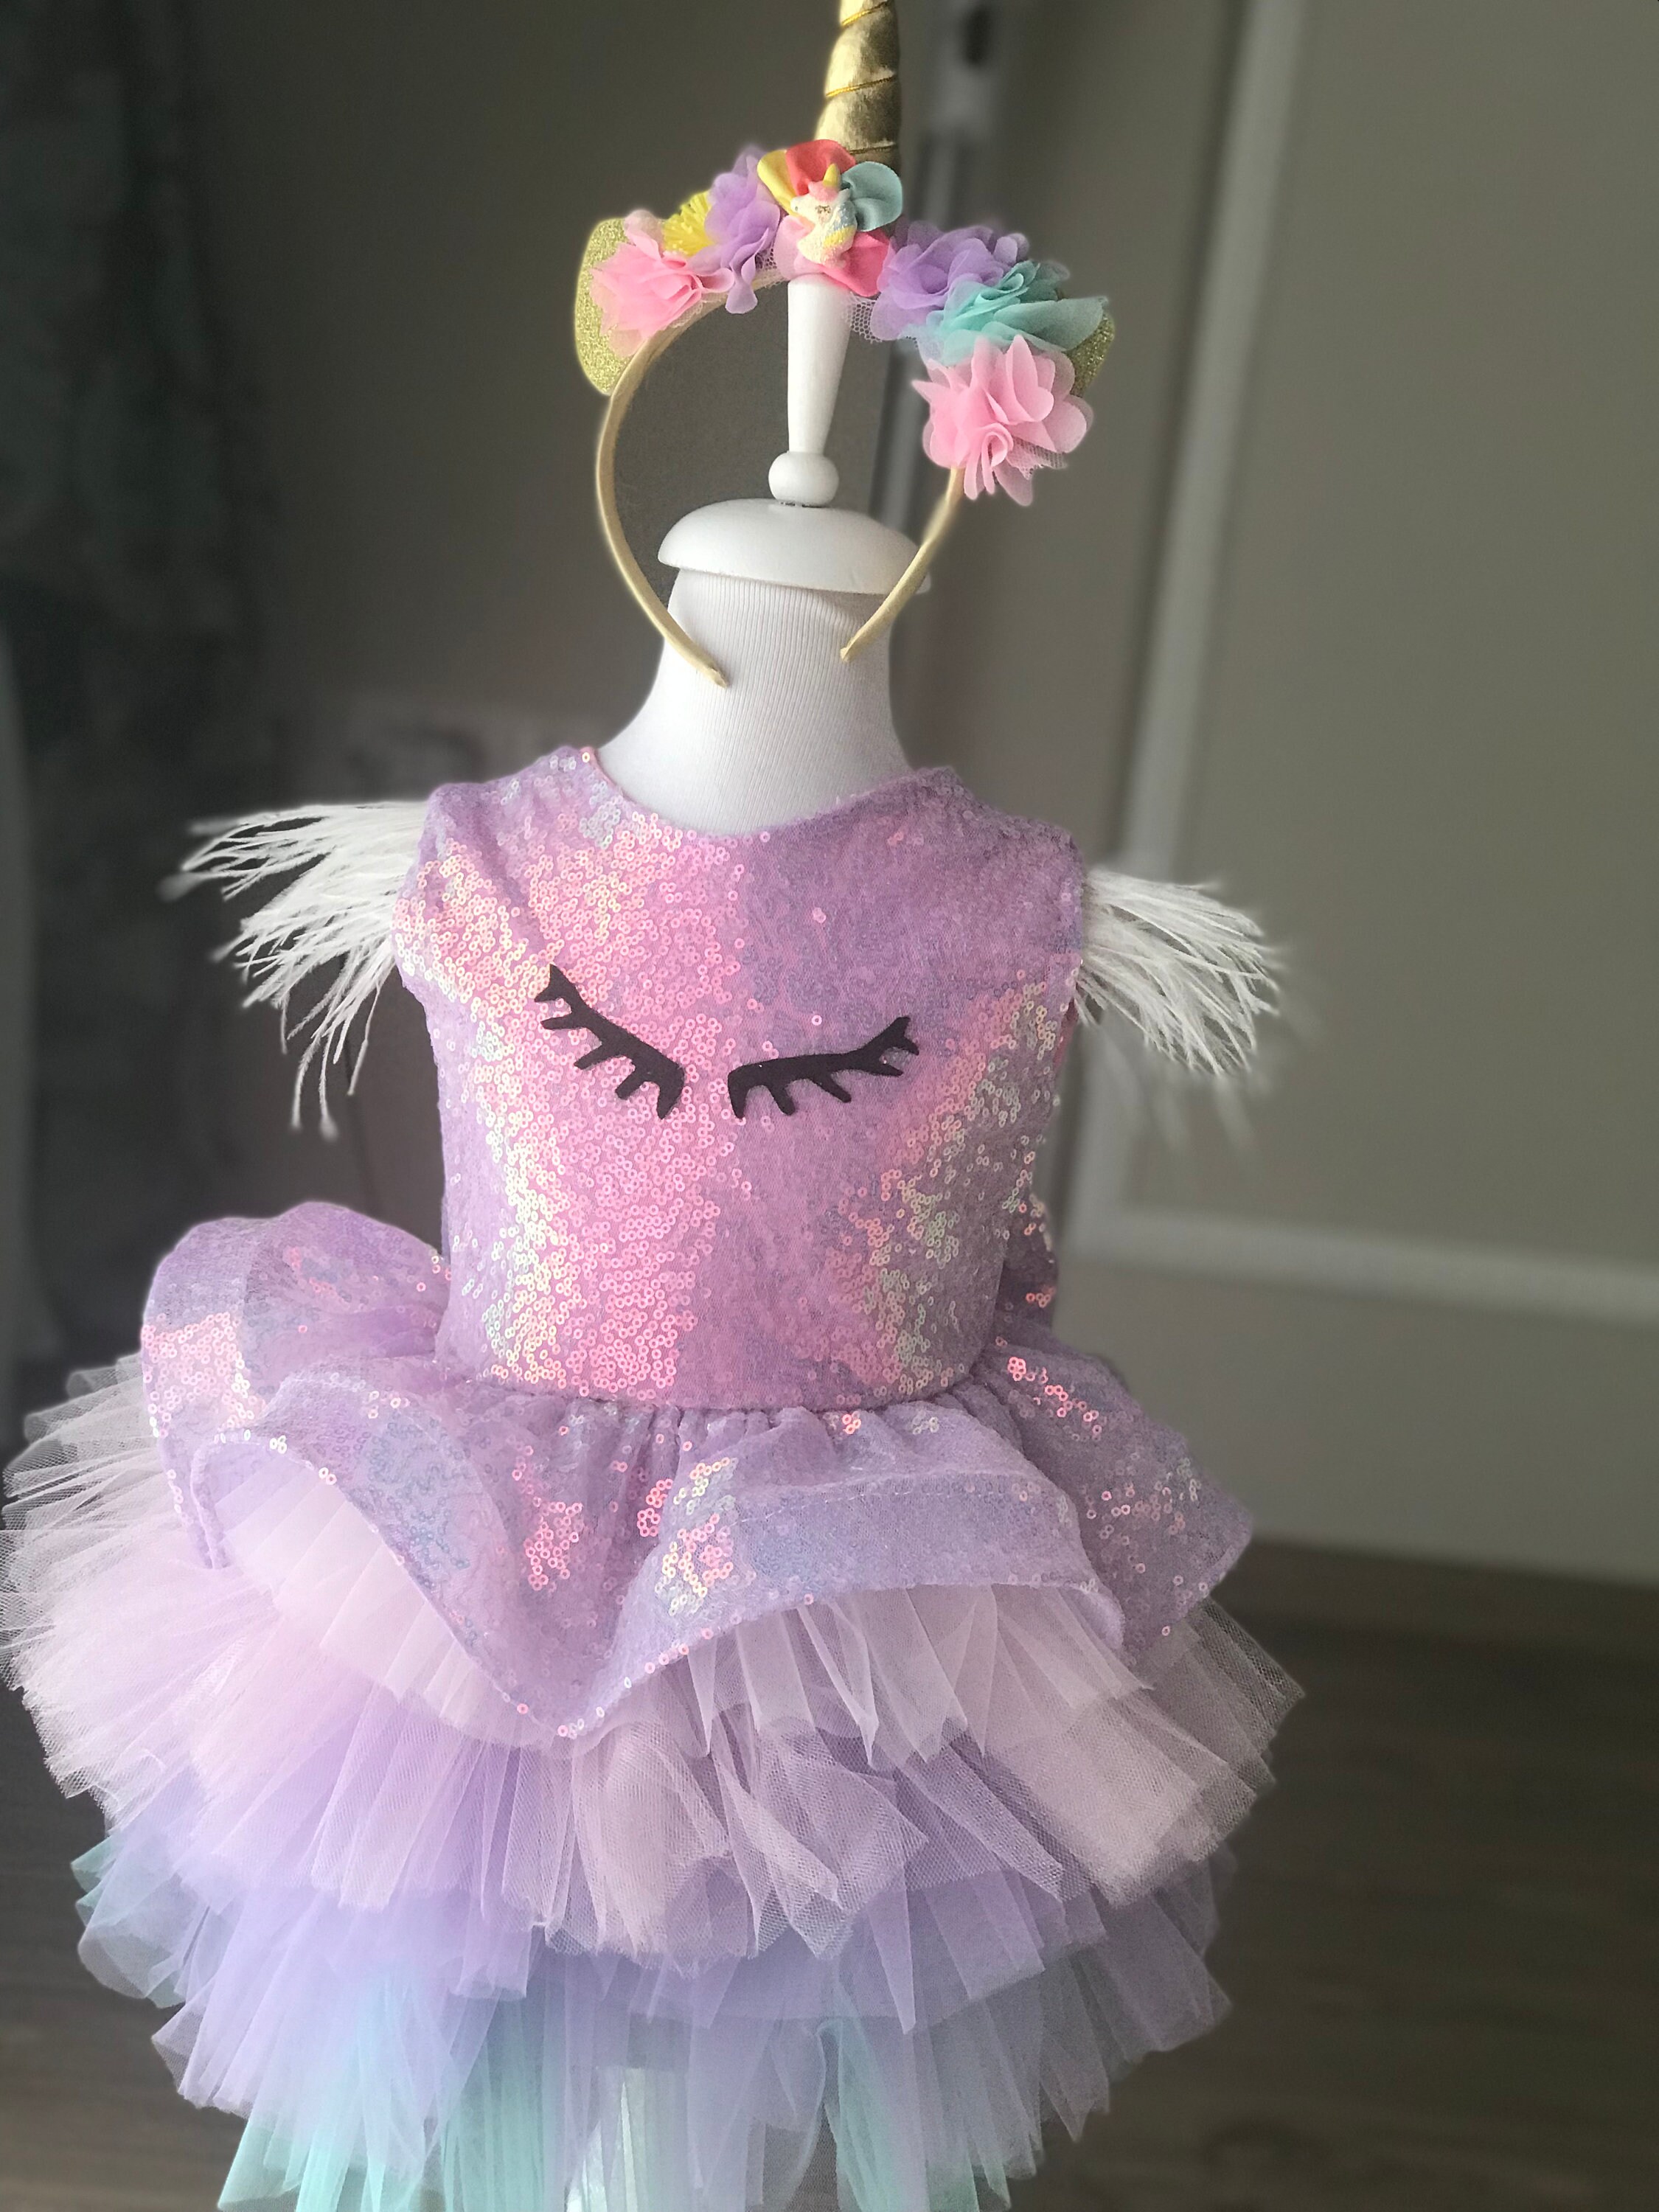 Flared-skirt Dress - Light pink/unicorns - Kids